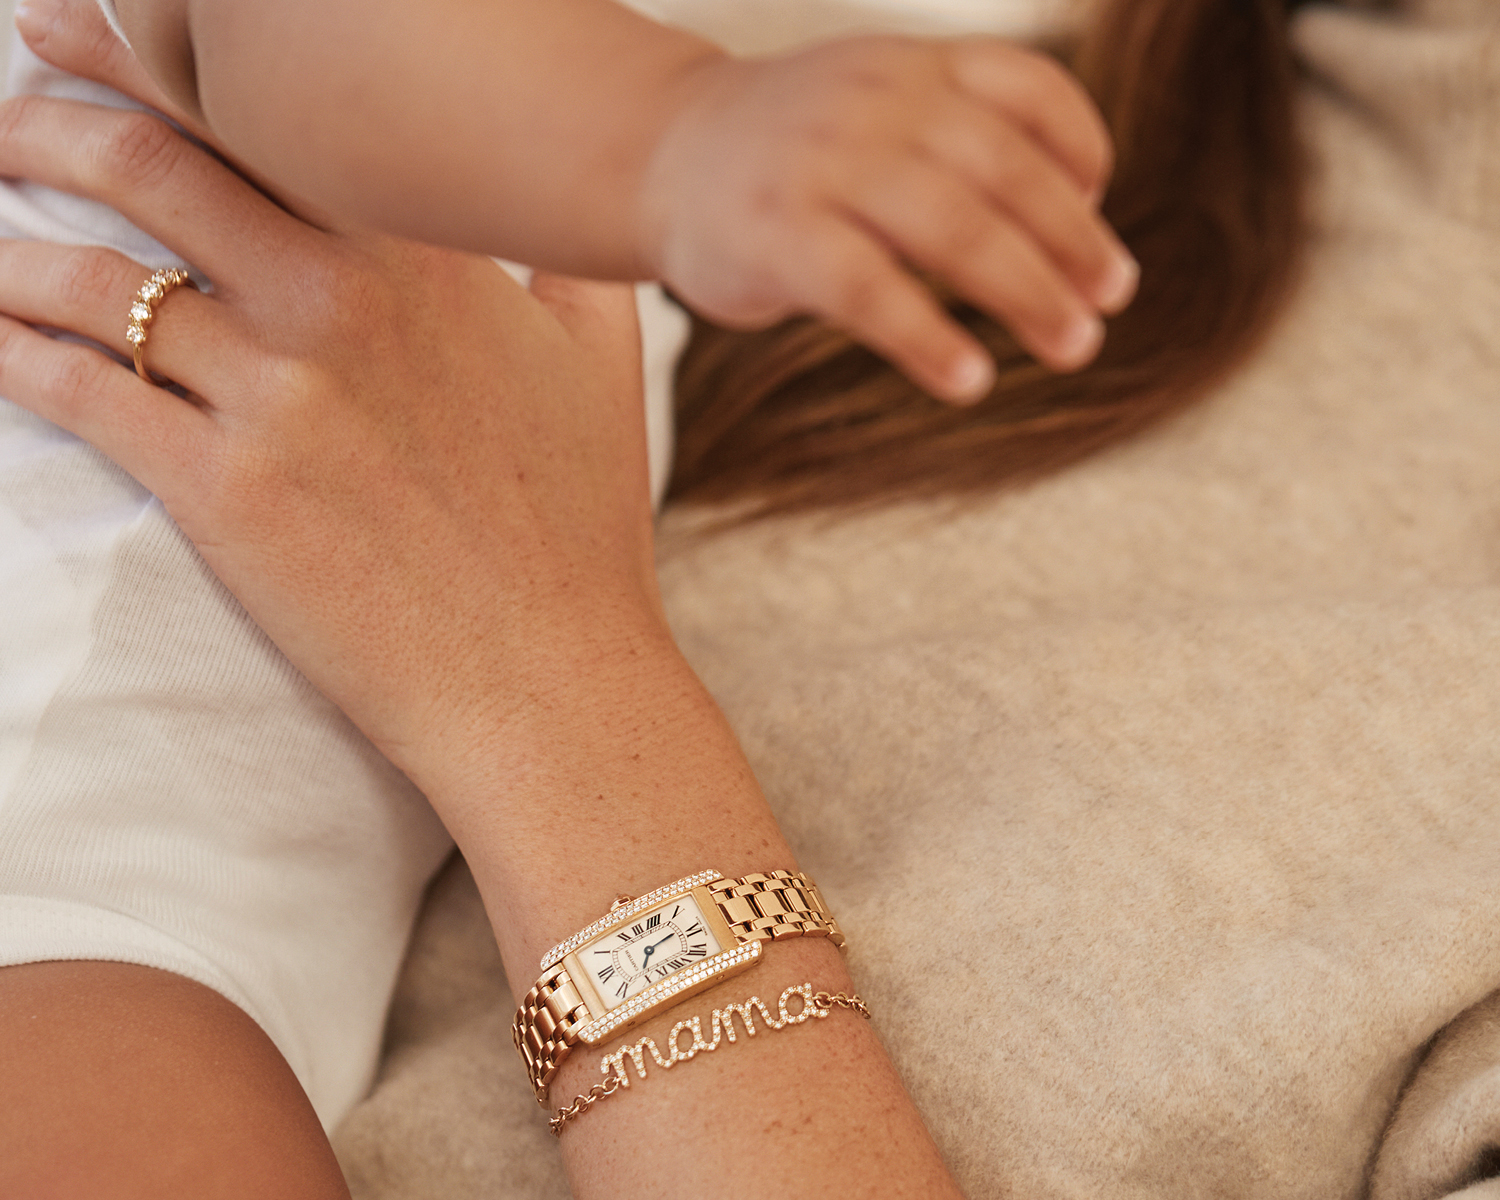 Mother's Day jewelry gifts cartier diamond watch and diamond bracelet